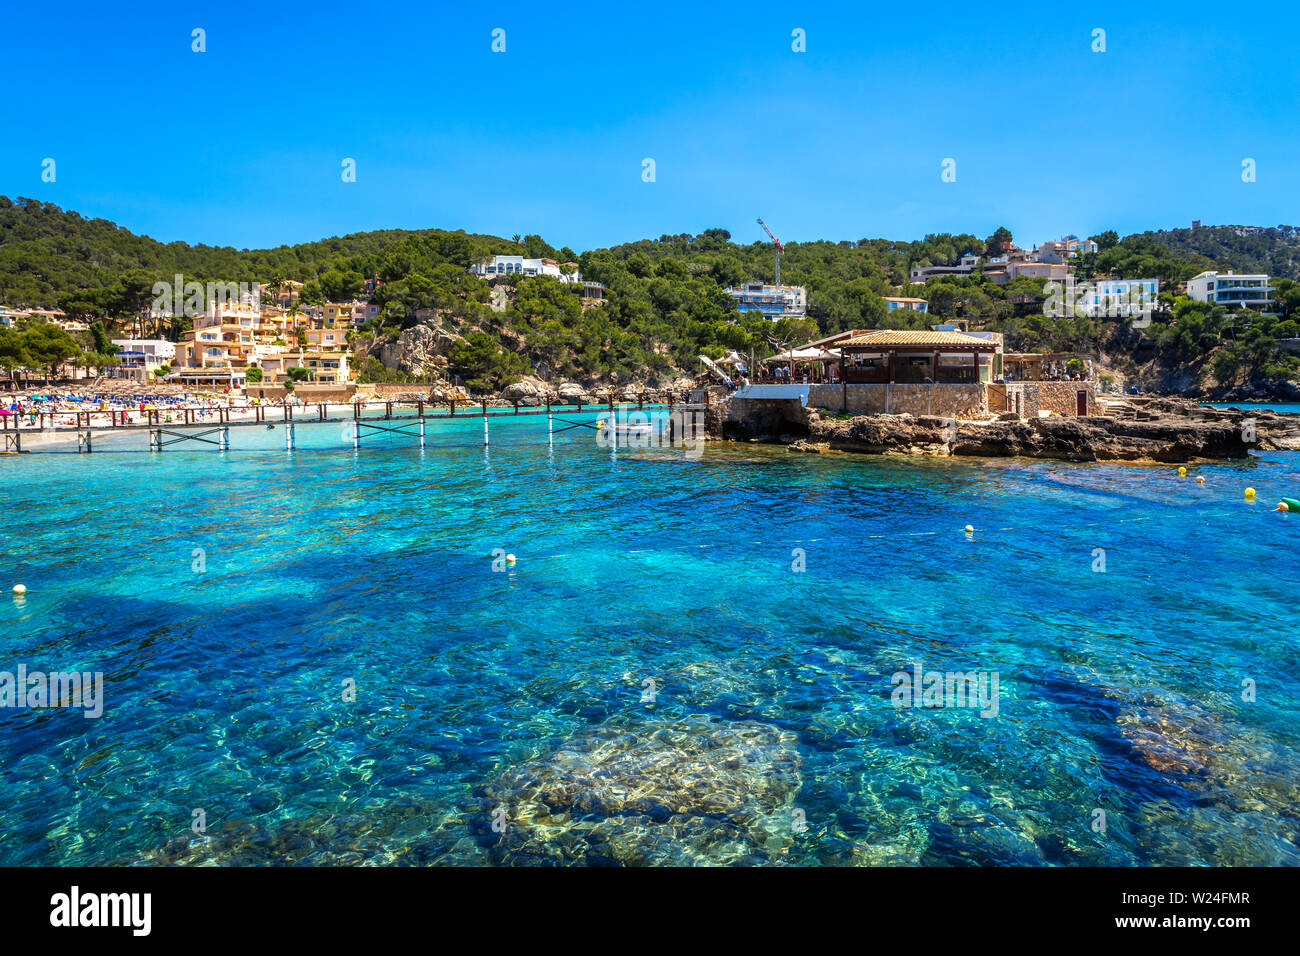 Playa de Camp de Mar, Es Camp de Mar, Mallorca, Spain Stock Photo - Alamy